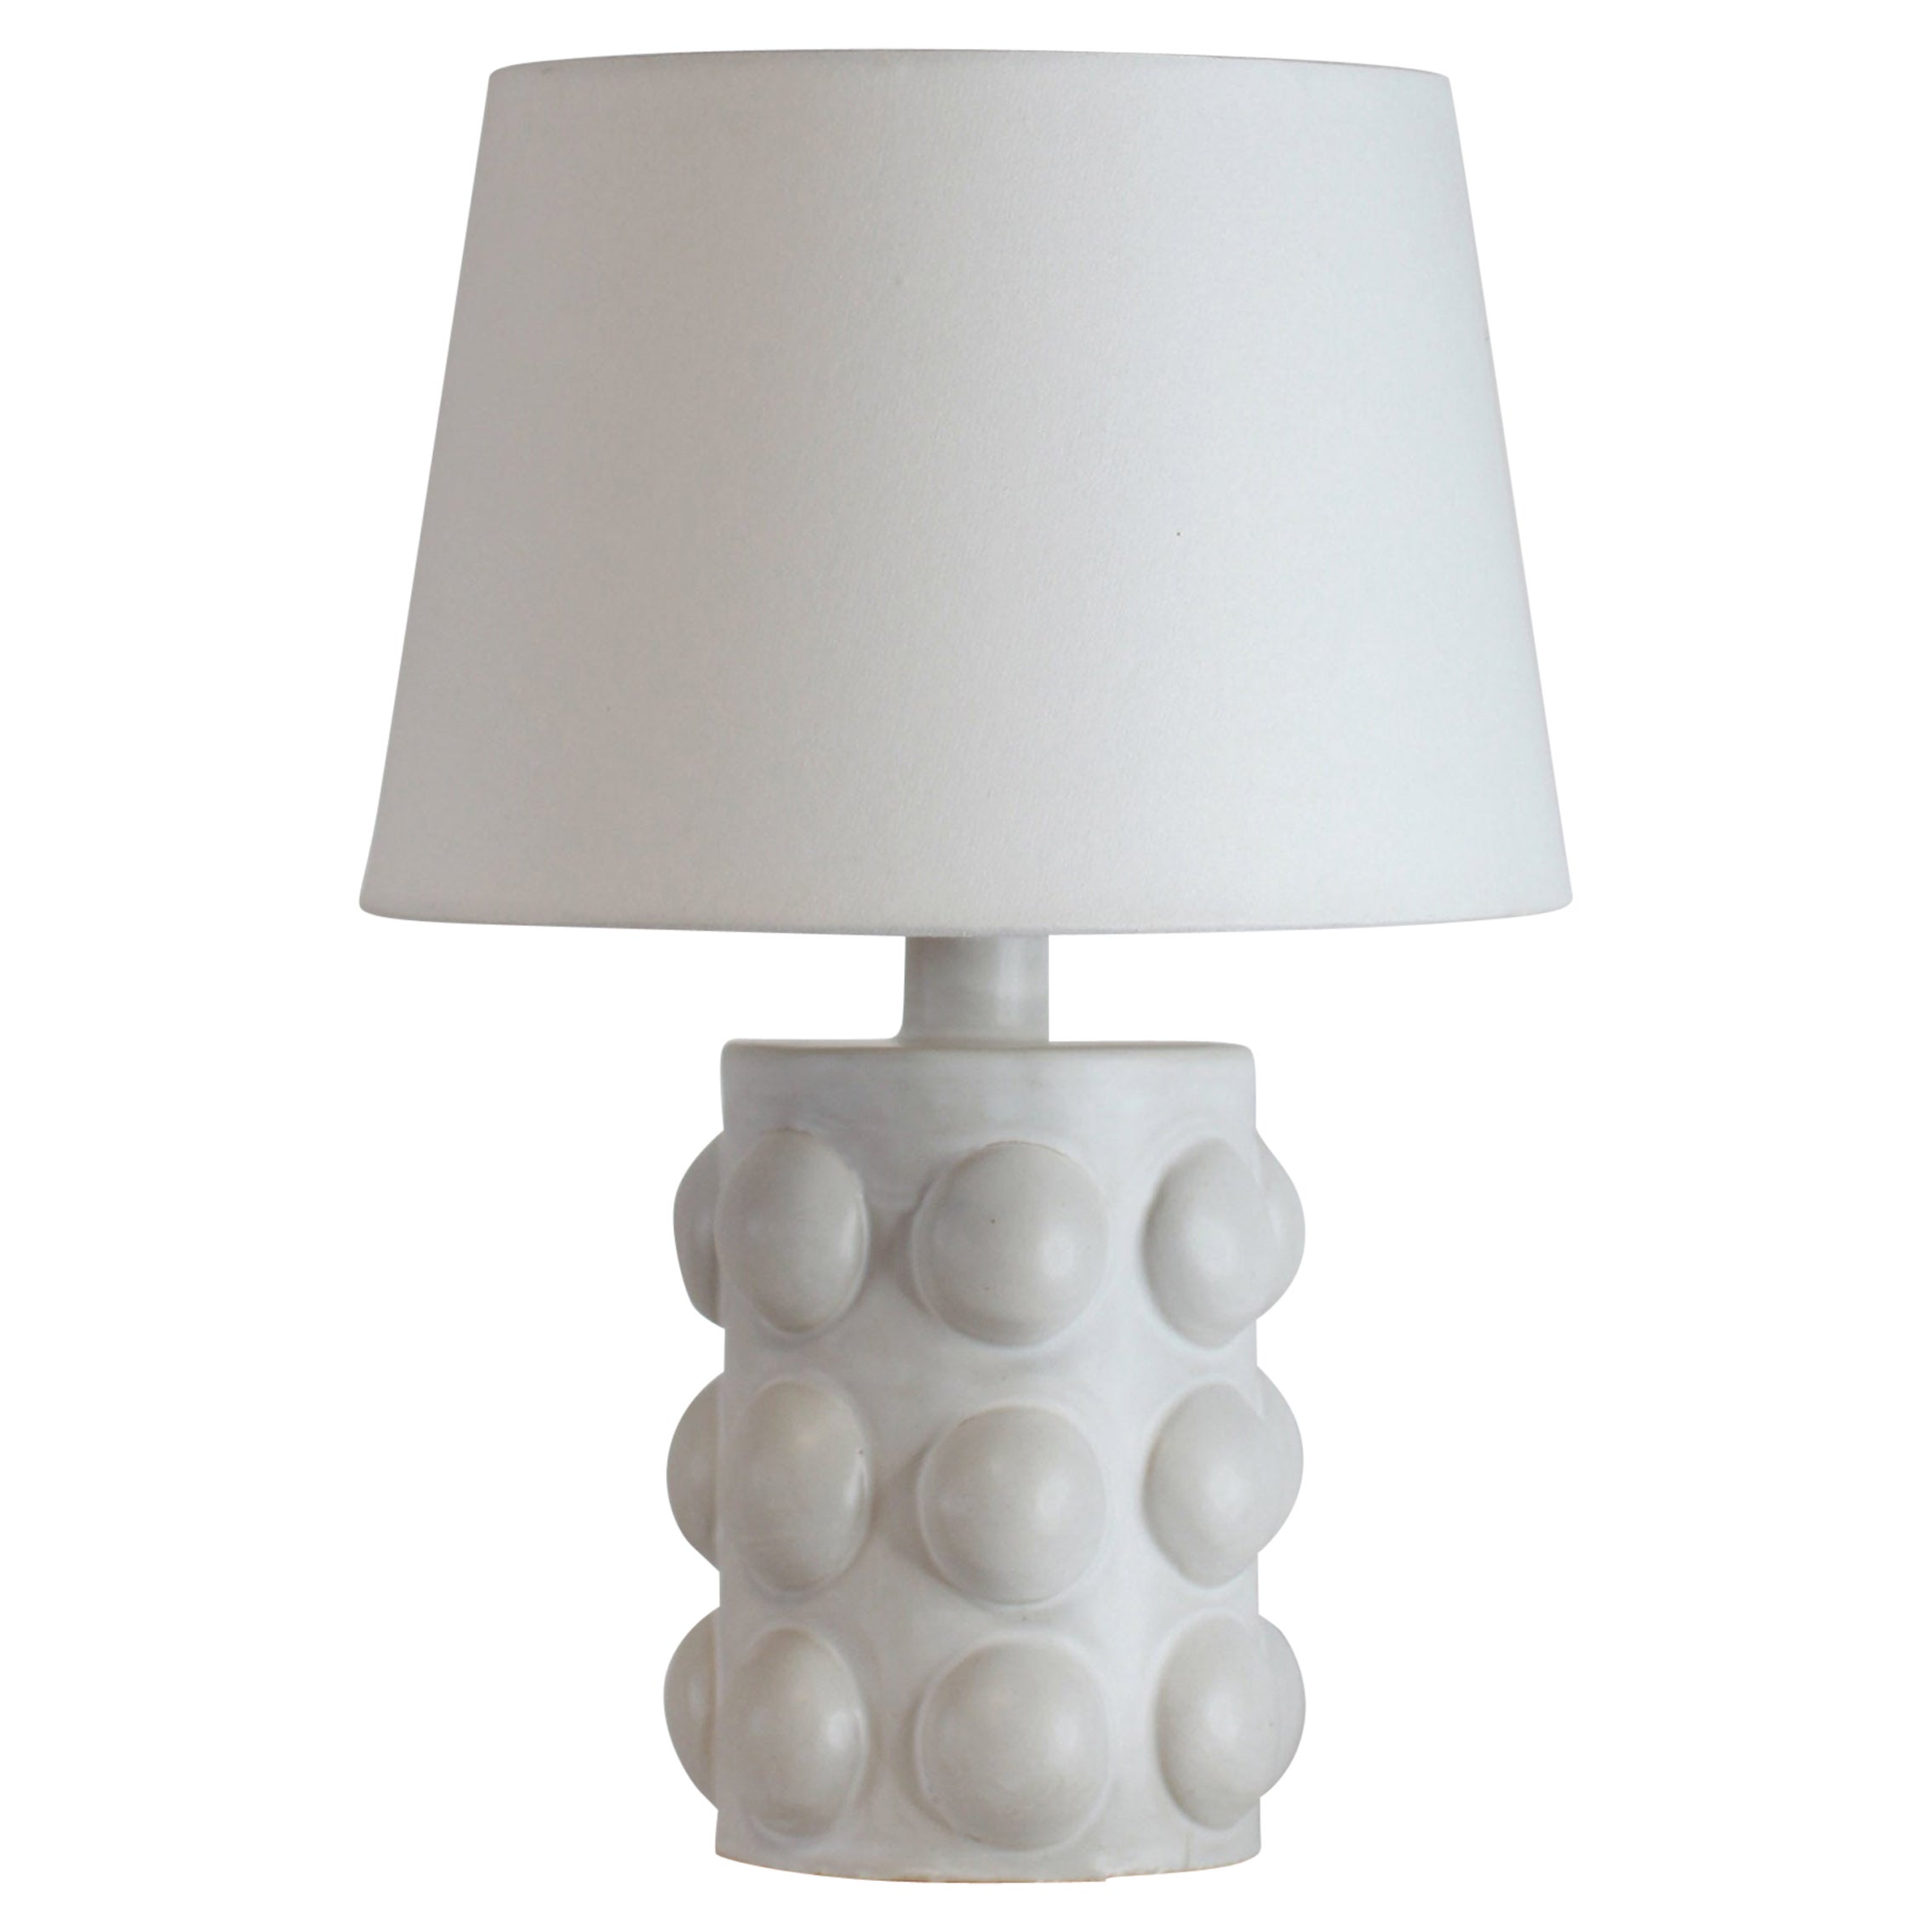 'Pastille' Satin White Glazed Ceramic Table Lamp by Design Frères For Sale